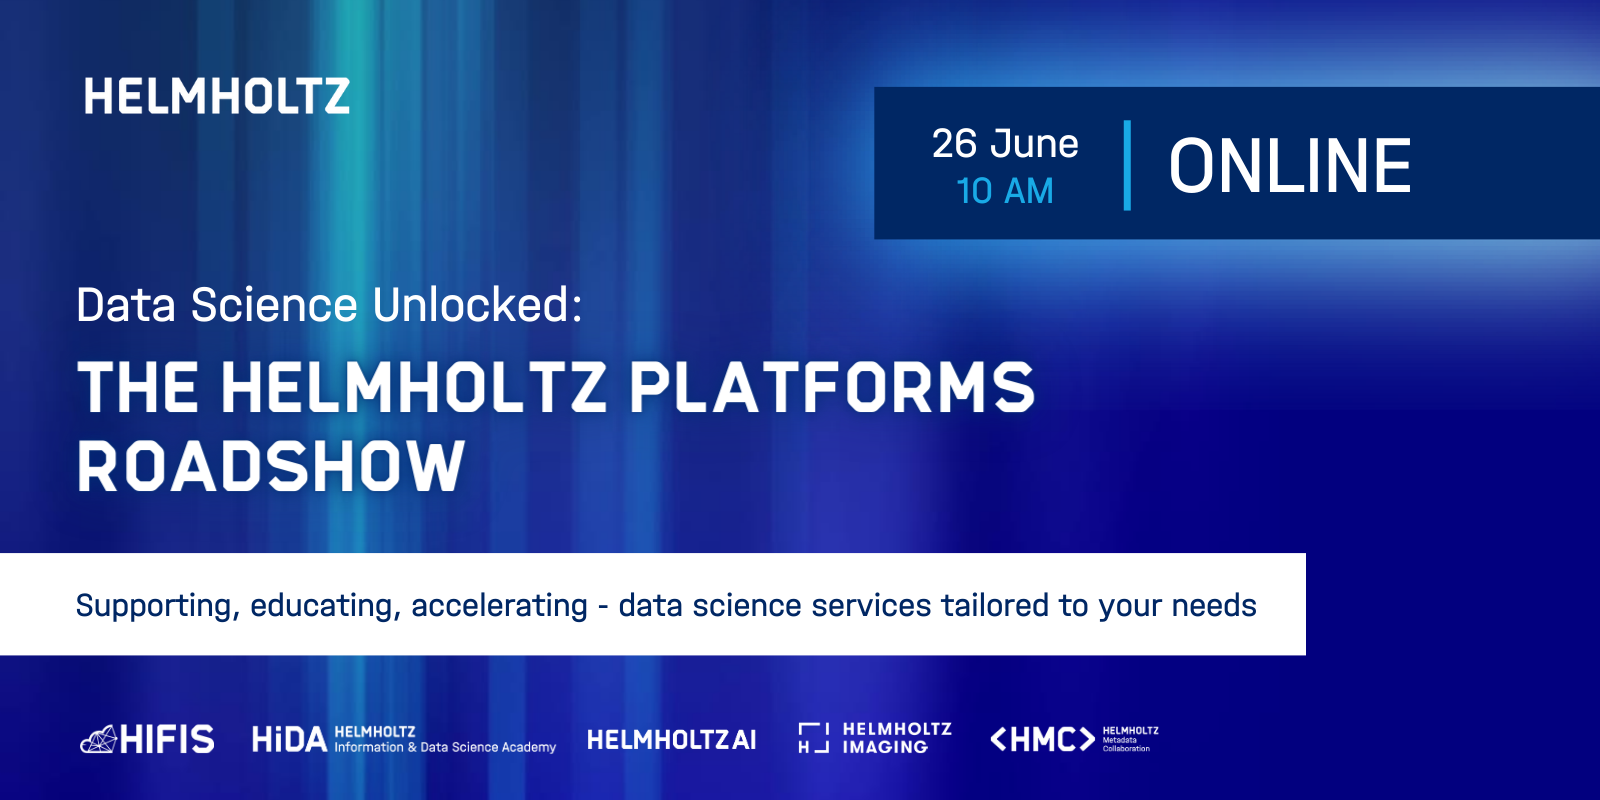 Decorative image to promote the Helmholtz Data Science Platforms Roadshow